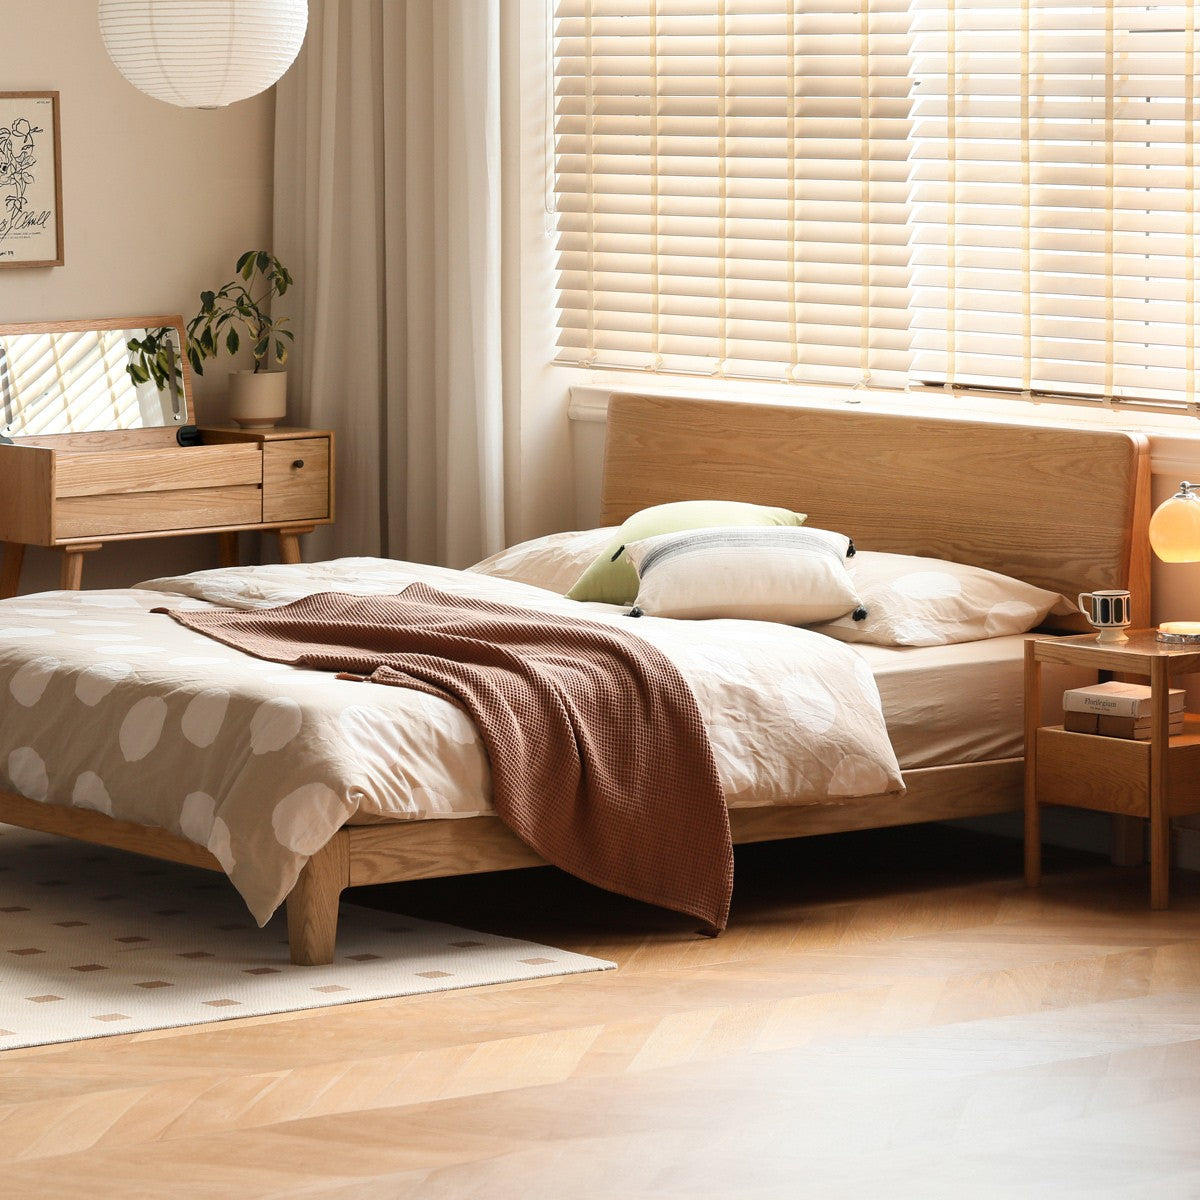 Oak solid wood bed "